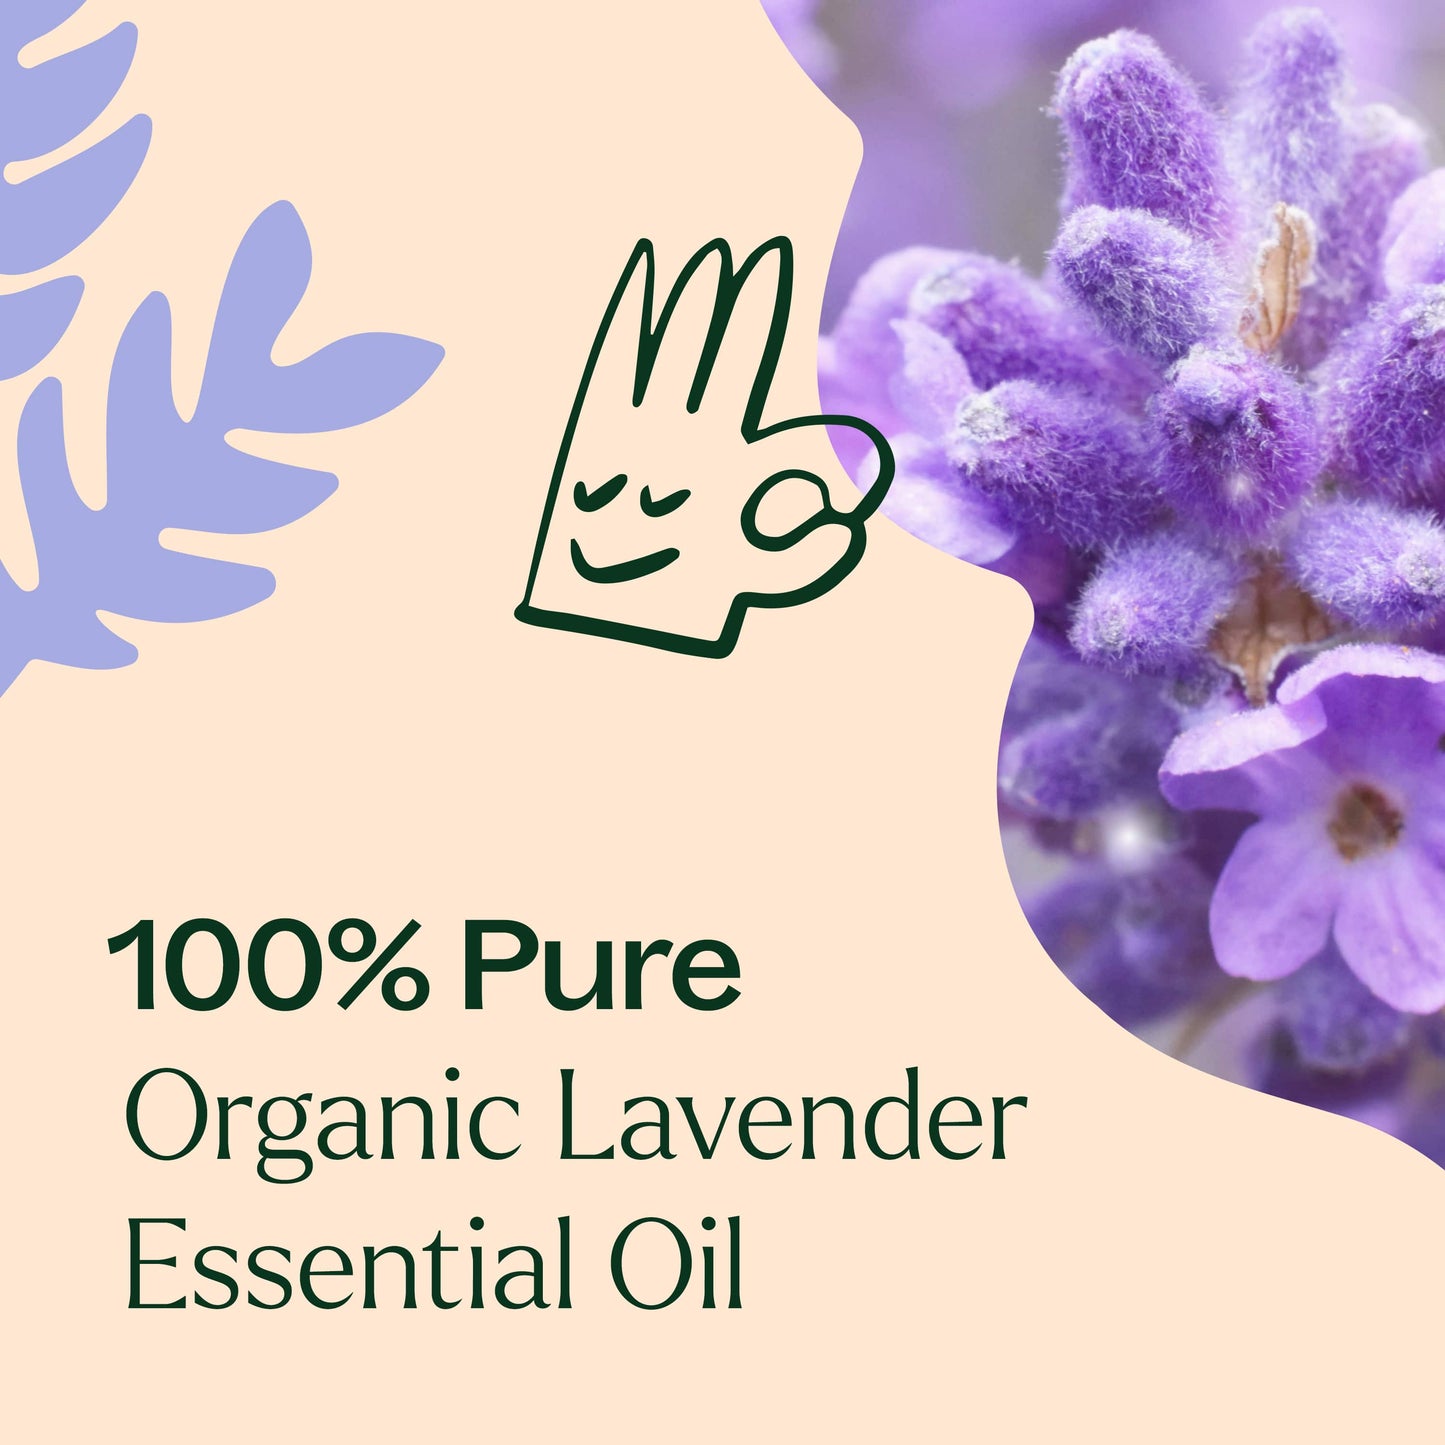 Organic Lavender Essential Oil is 100% pure